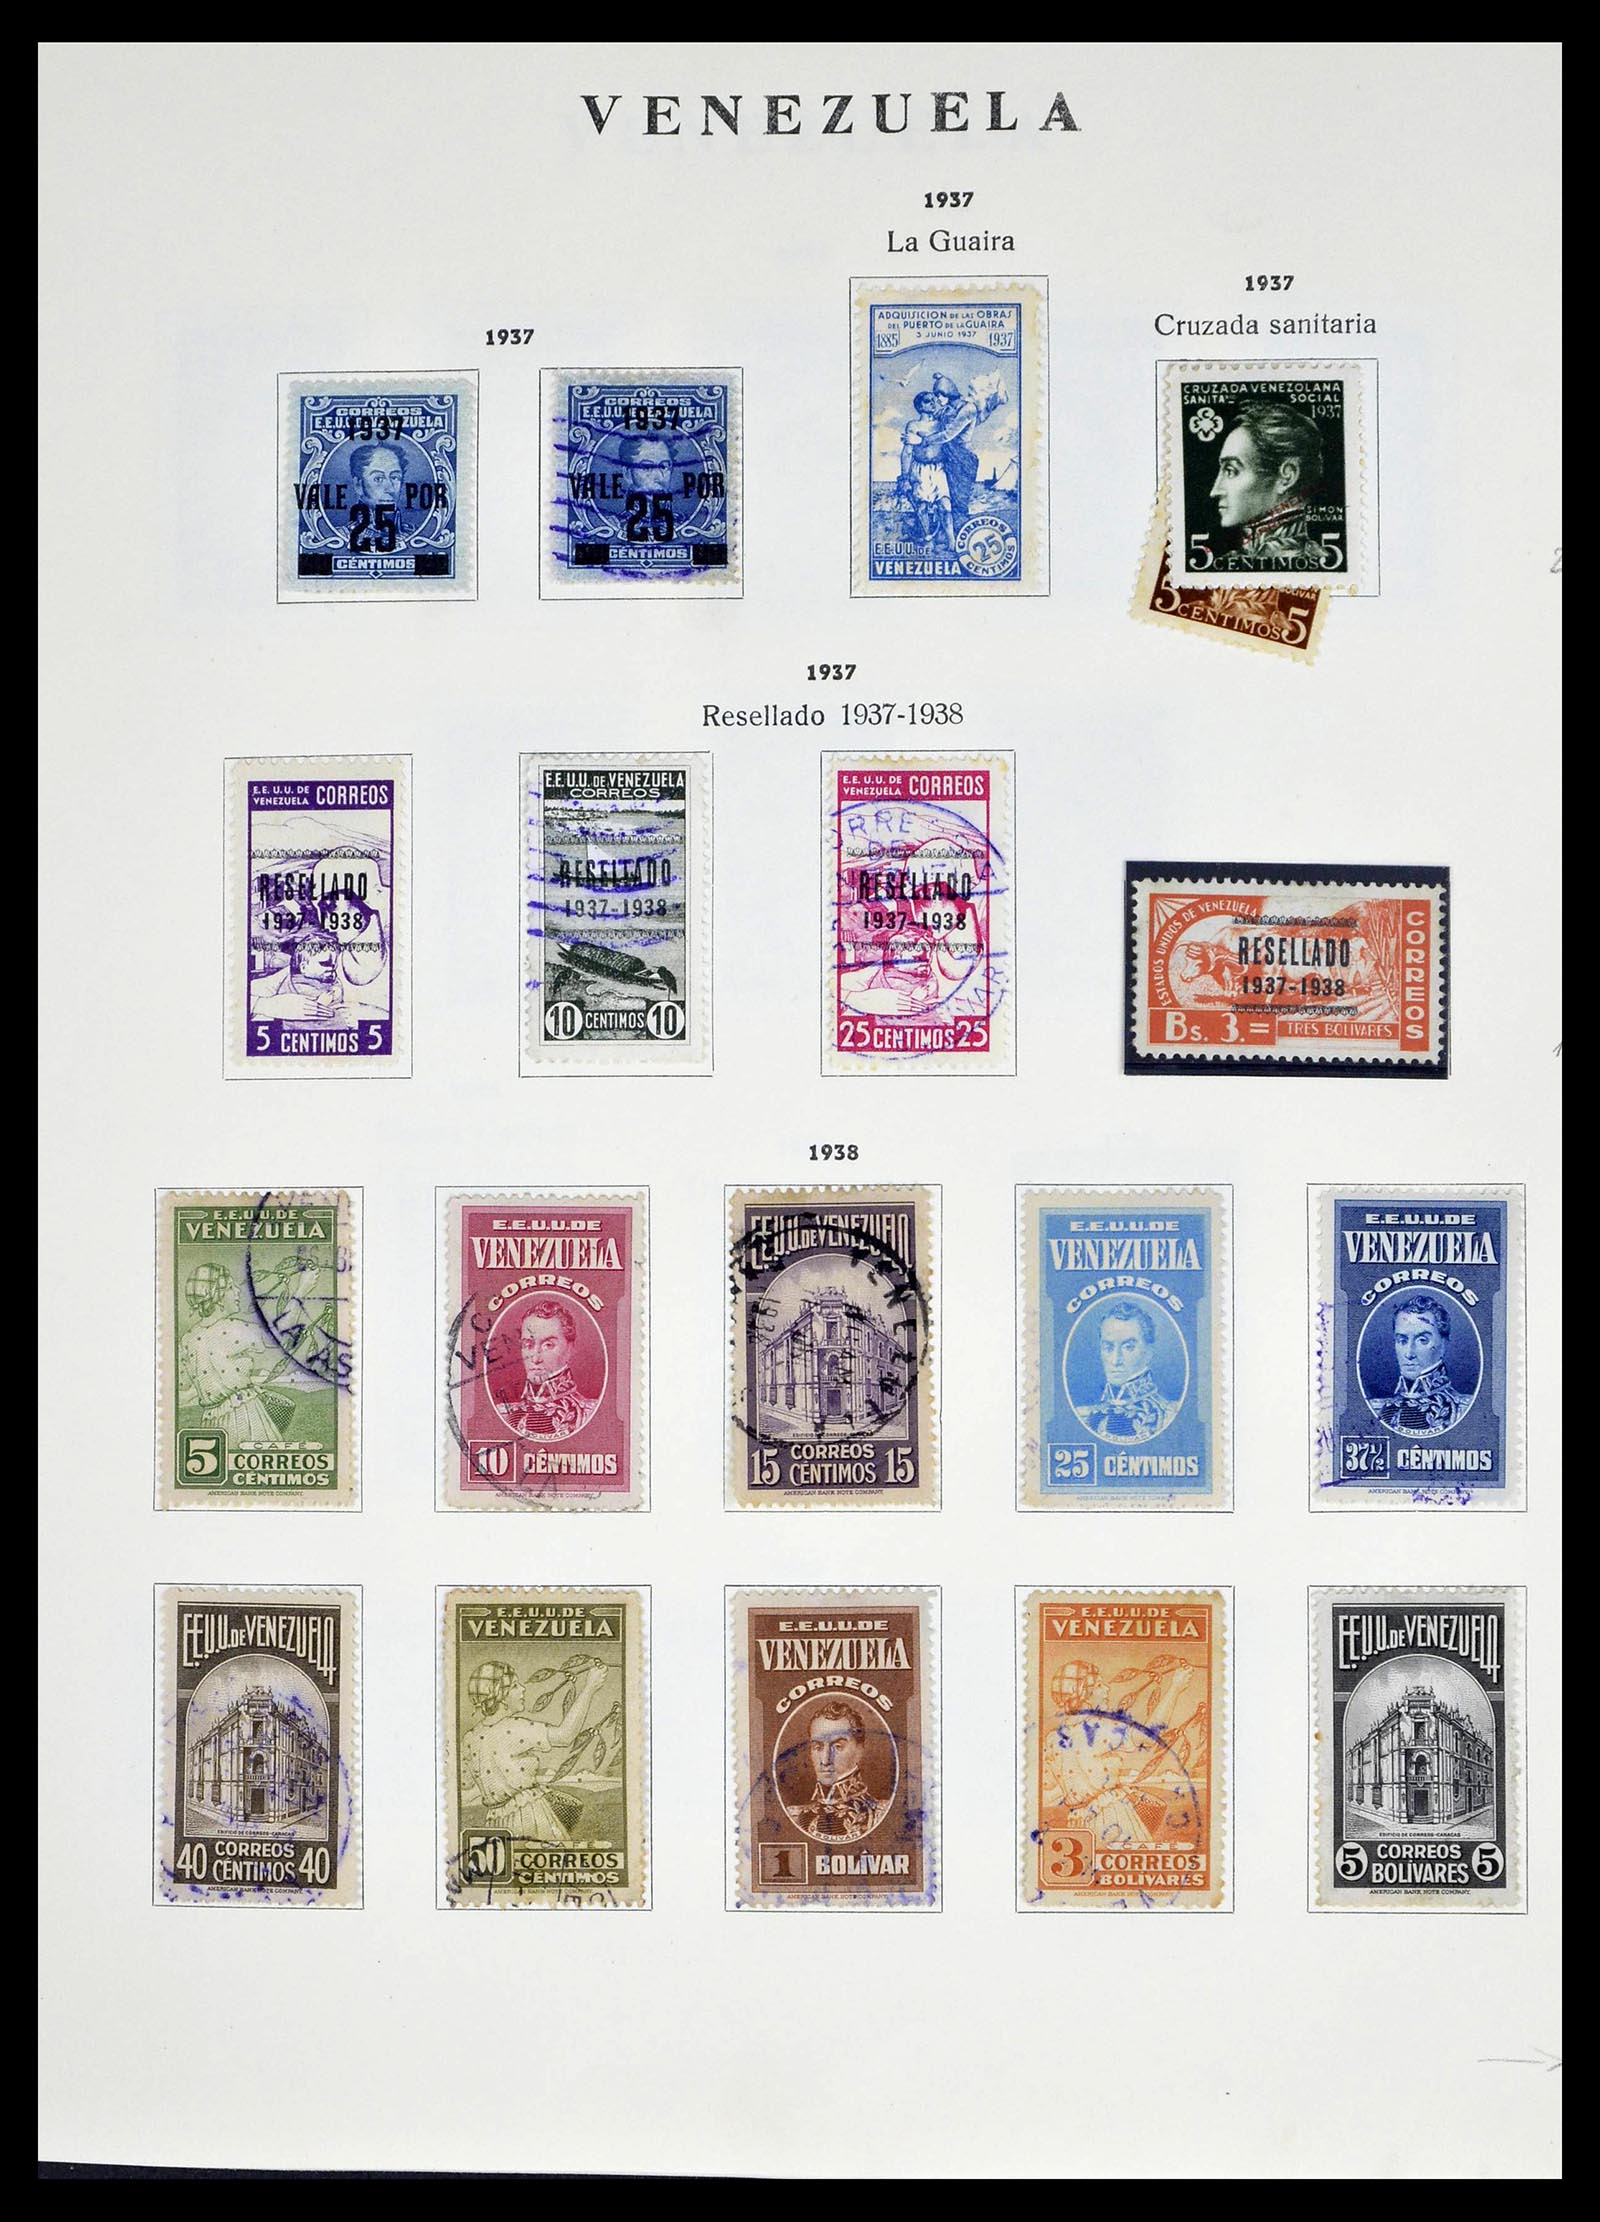 39223 0013 - Stamp collection 39223 Venezuela 1859-1984.